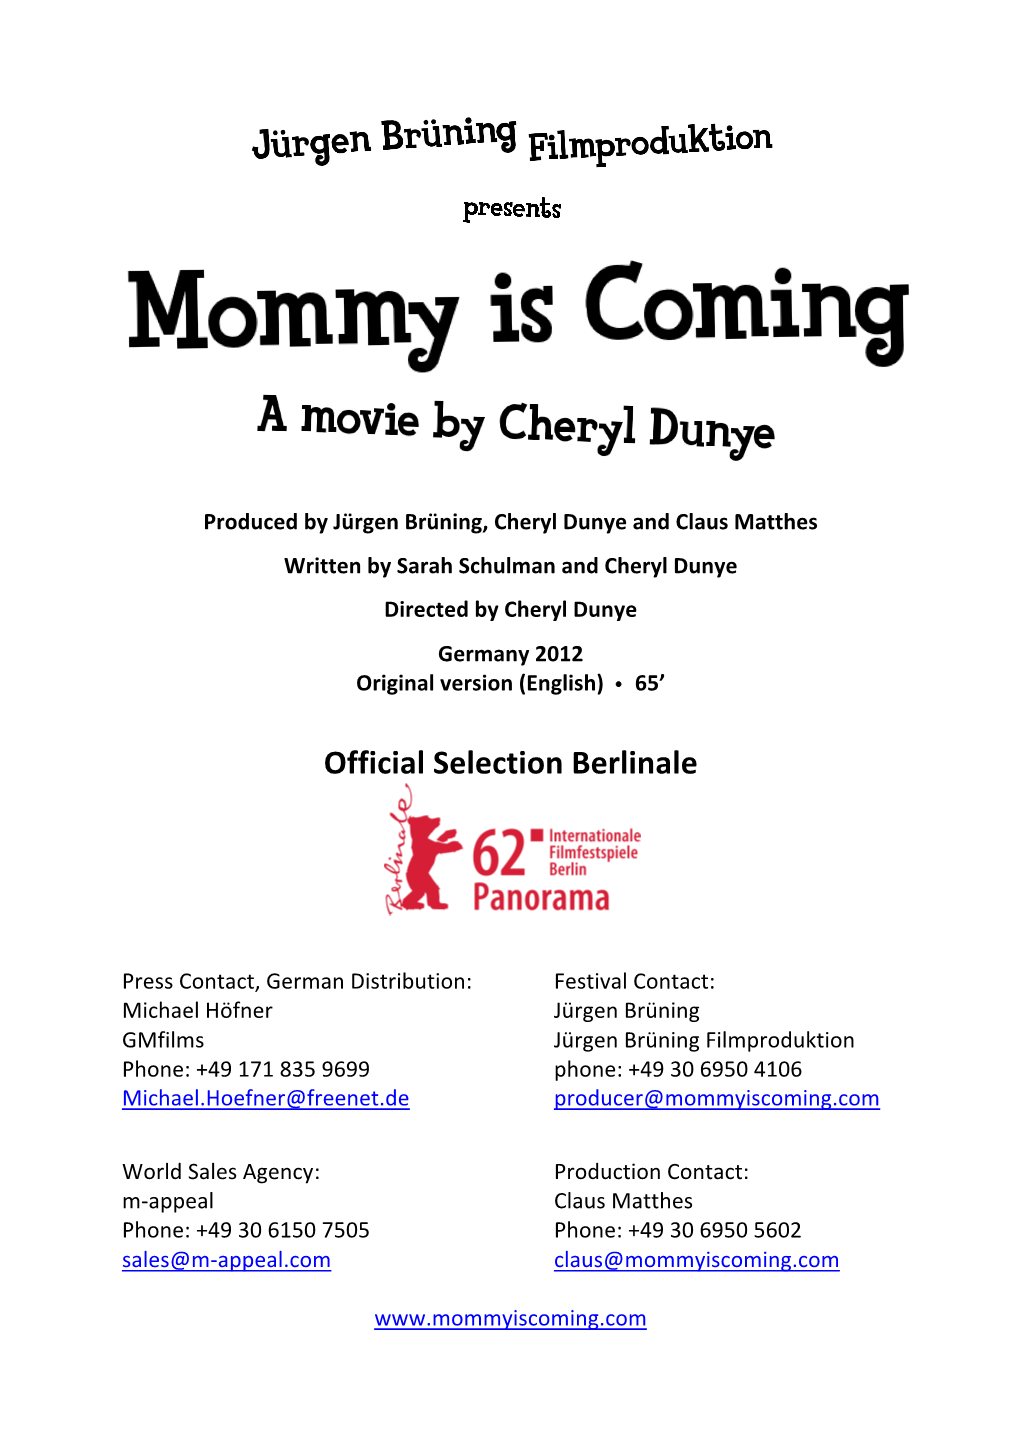 Cheryl Dunye and Claus Matthes Written by Sarah Schulman and Cheryl Dunye Directed by Cheryl Dunye Germany 2012 Original Version (English) • 65’